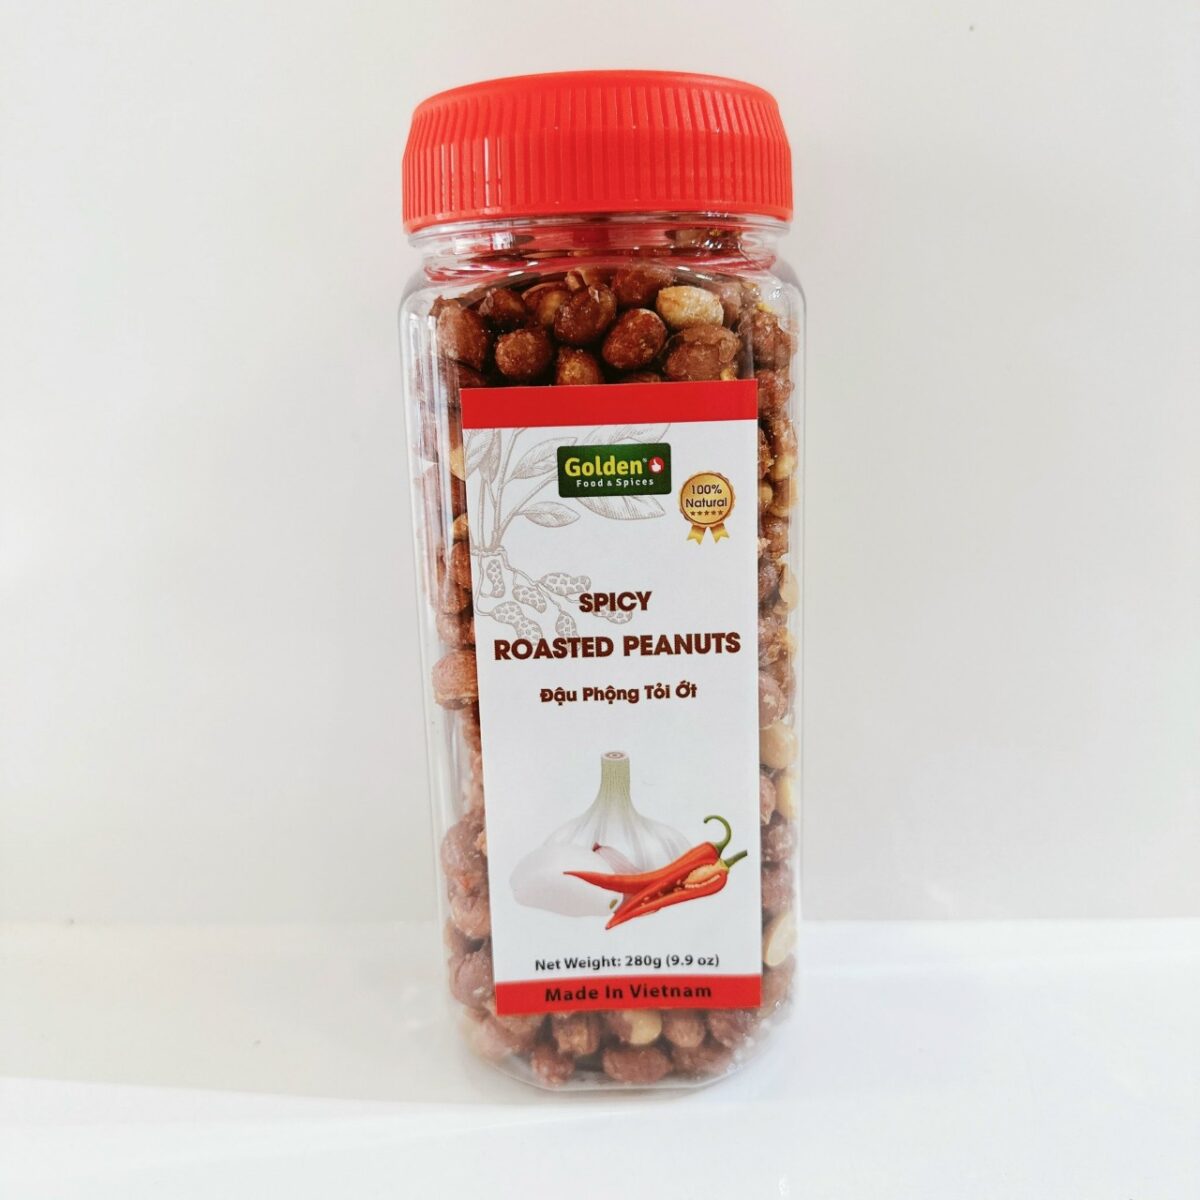 Spicy Roasted Peanuts - Đậu phộng tỏi ớt